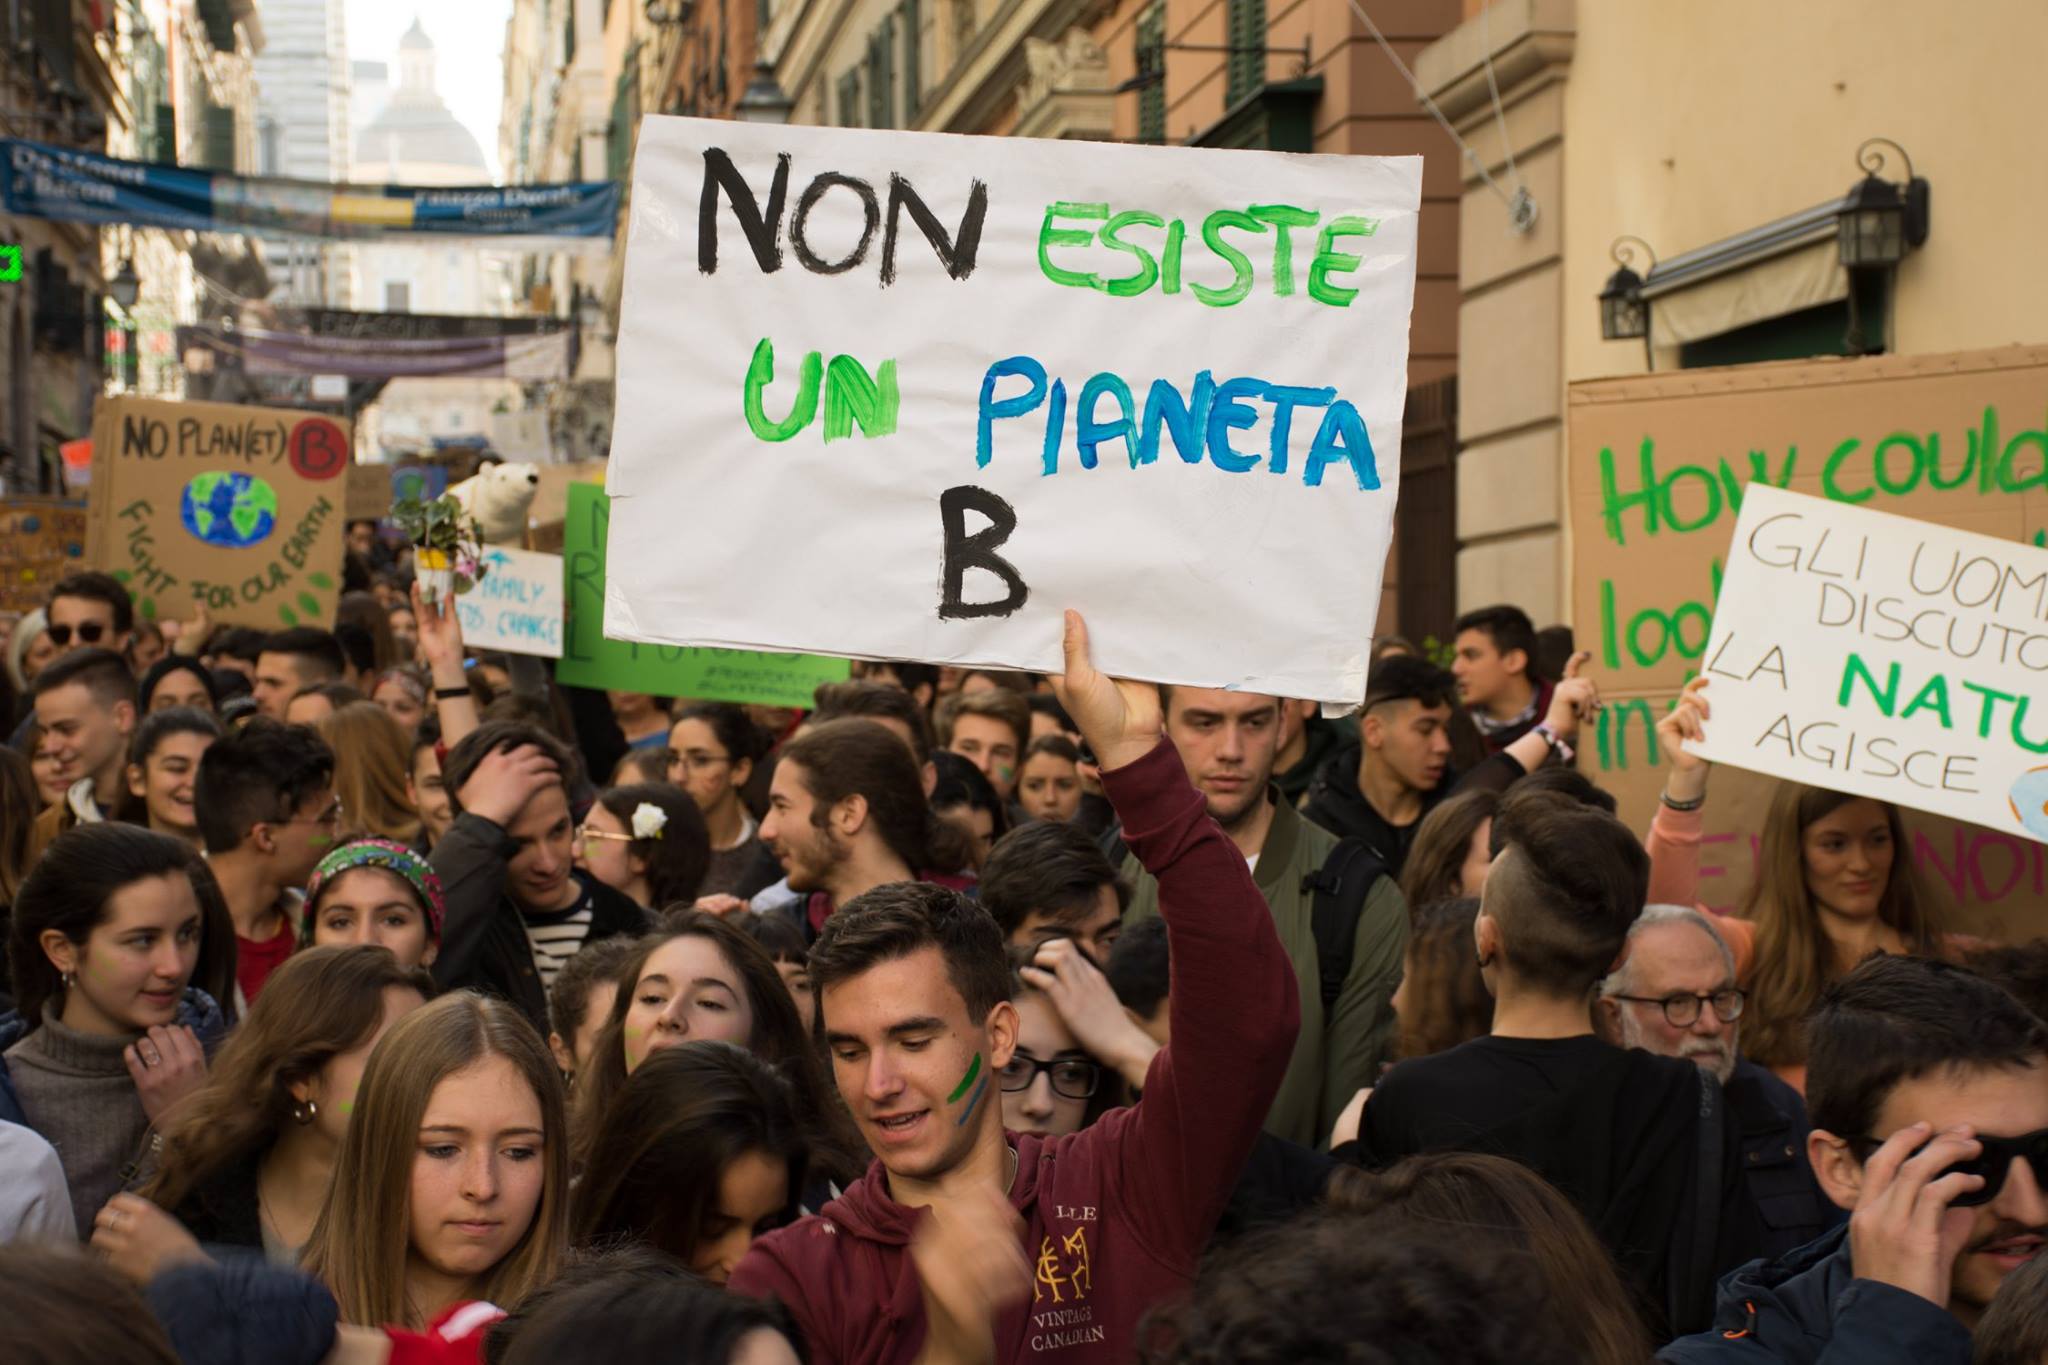 https://www.primocanale.it/materialiarchivio/immagininews/20190926192444-Climate_strike_(9).jpg